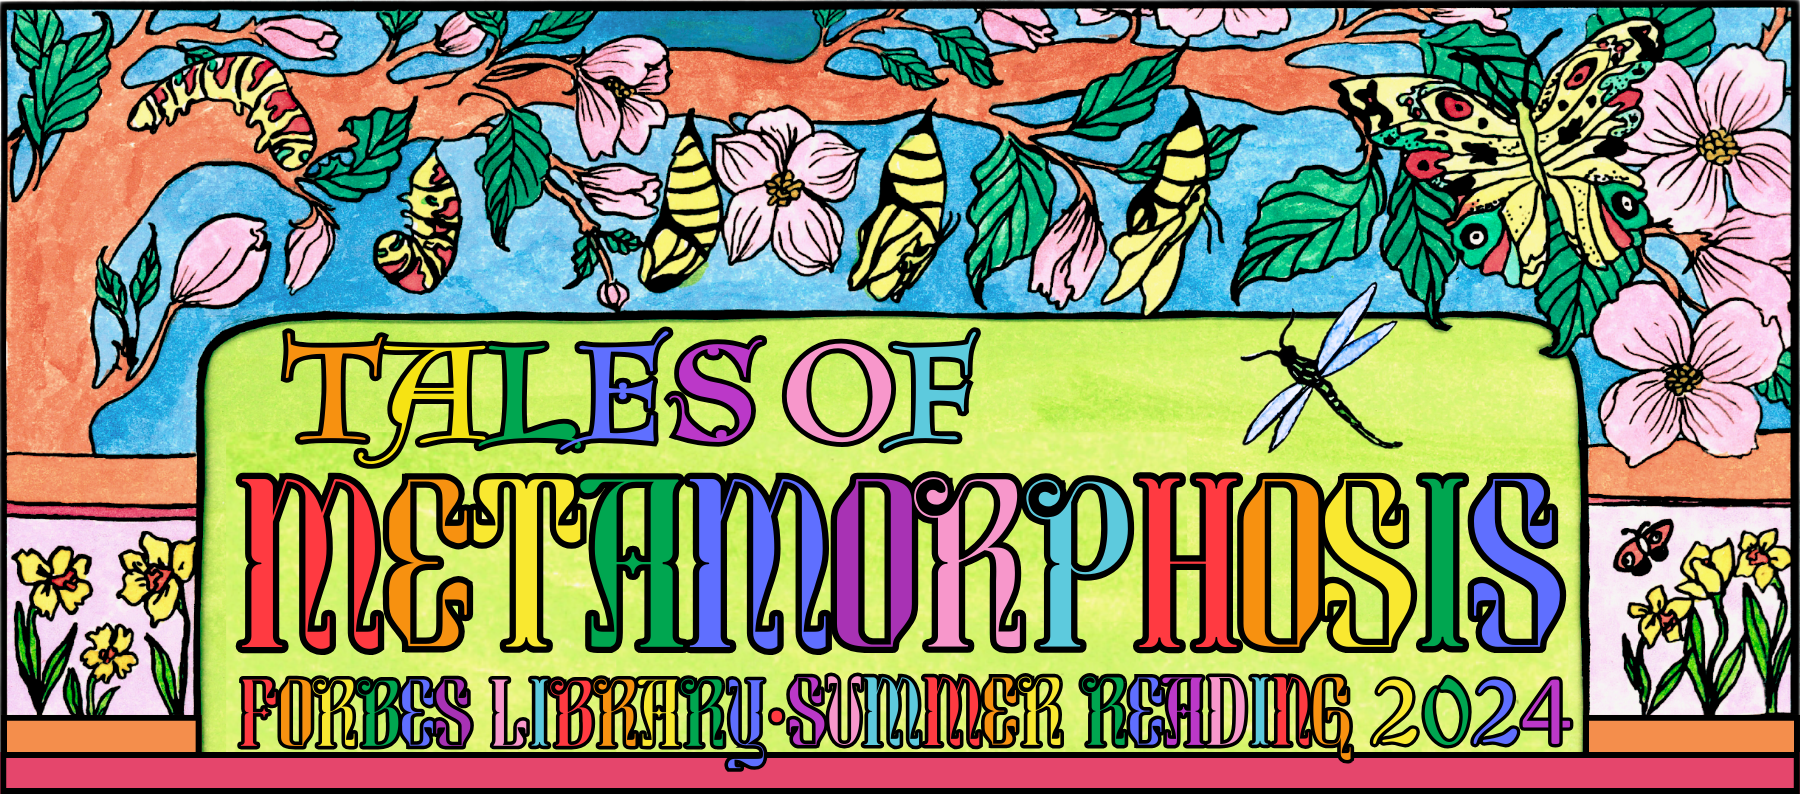 Tales of Metamorphosis
Forbes Library Summer Reading 2024